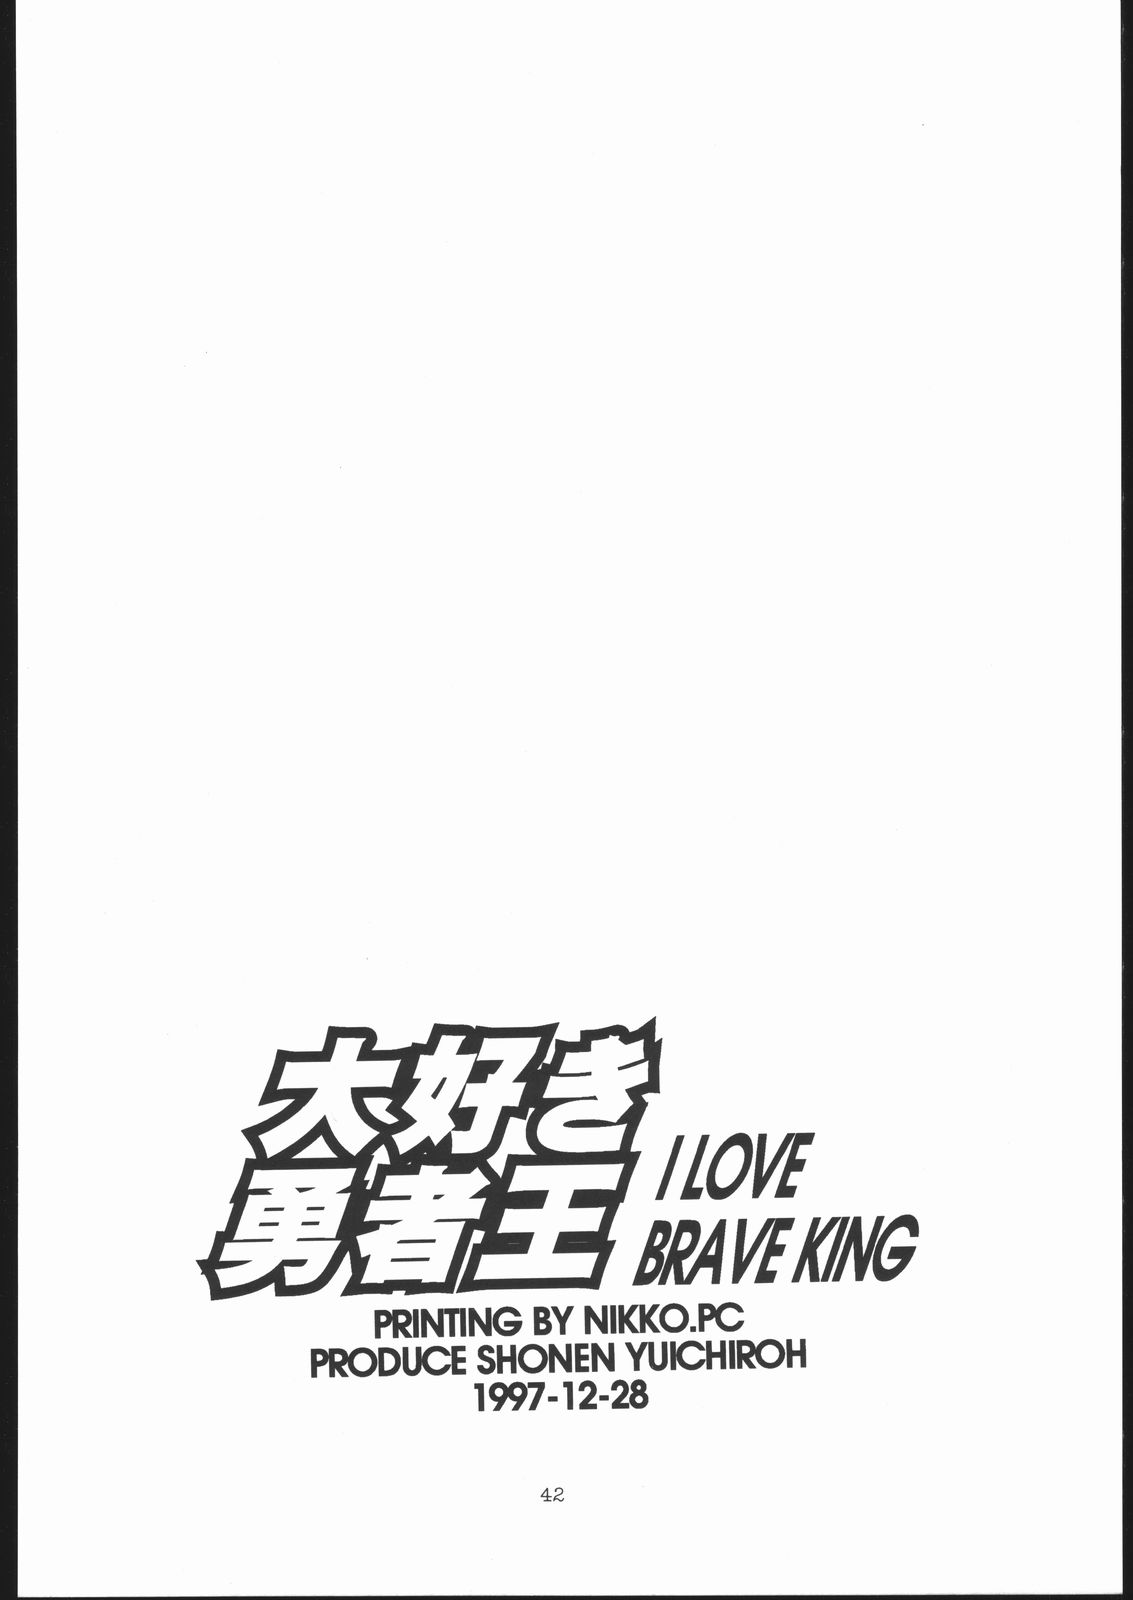 [GaoGaiGar] I Love Brave King (Shonen Yuichiroh) 